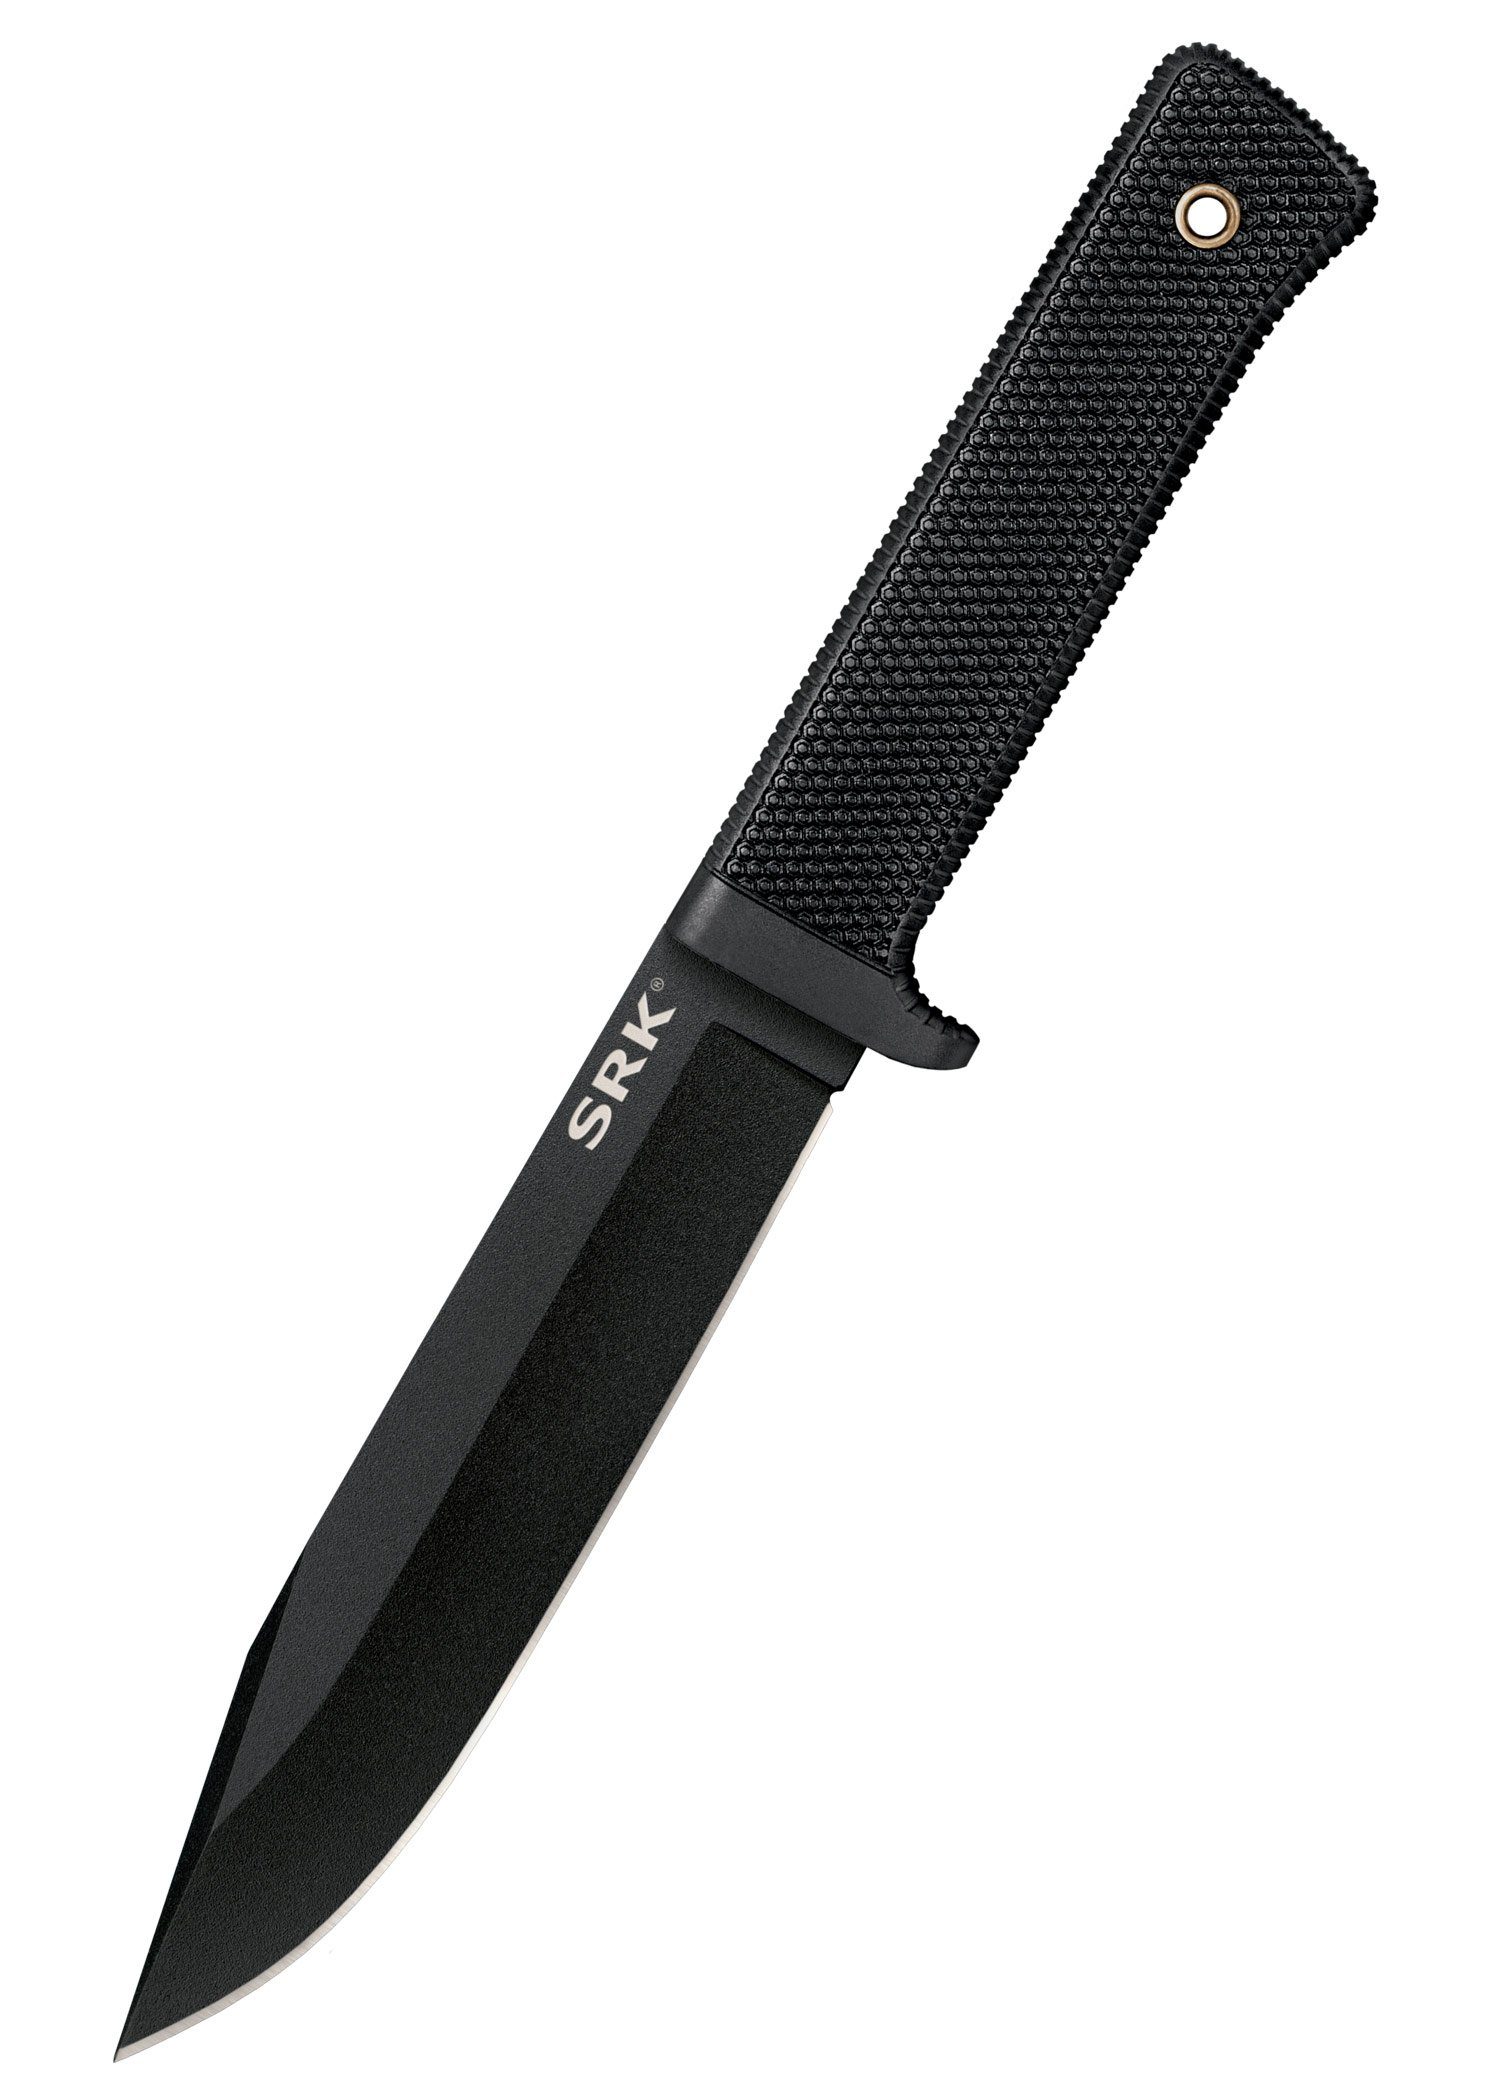 Cold Steel Survival Knife Cold Steel SRK aus SK-5 Karbonstahl mit Secure-Ex Scheide, (1 St) schwarz